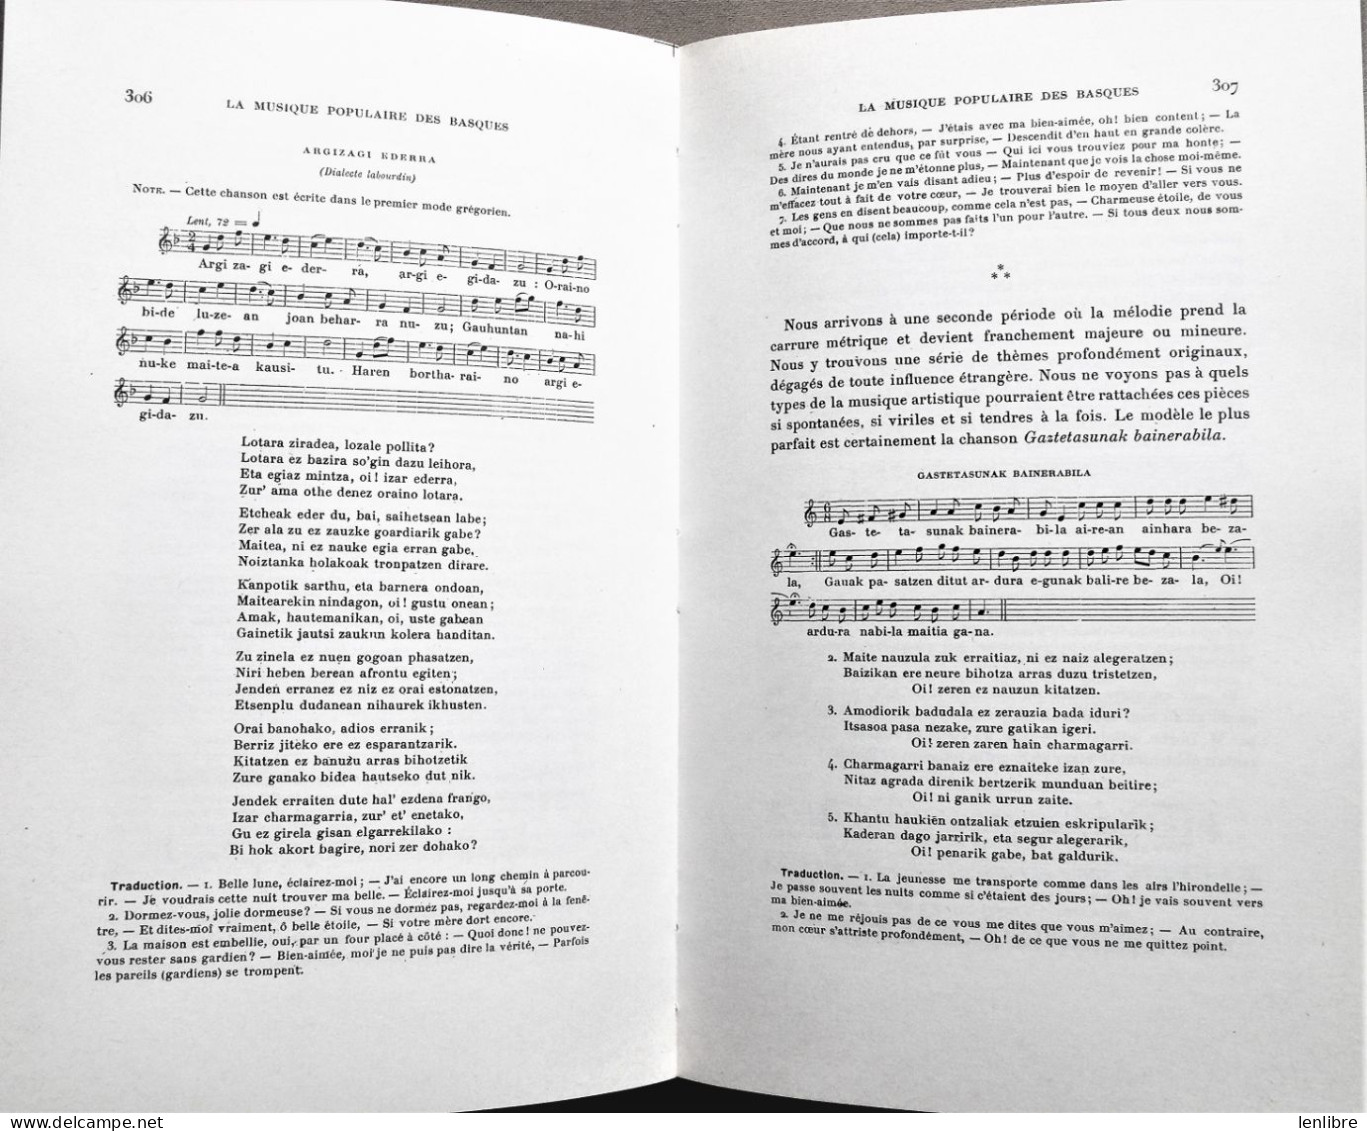 La TRADITION au PAYS BASQUE. Ethnographie, Folklore, Art populaire, Histoire, Hagiographie. Editions ELKAR. Circa 1982.